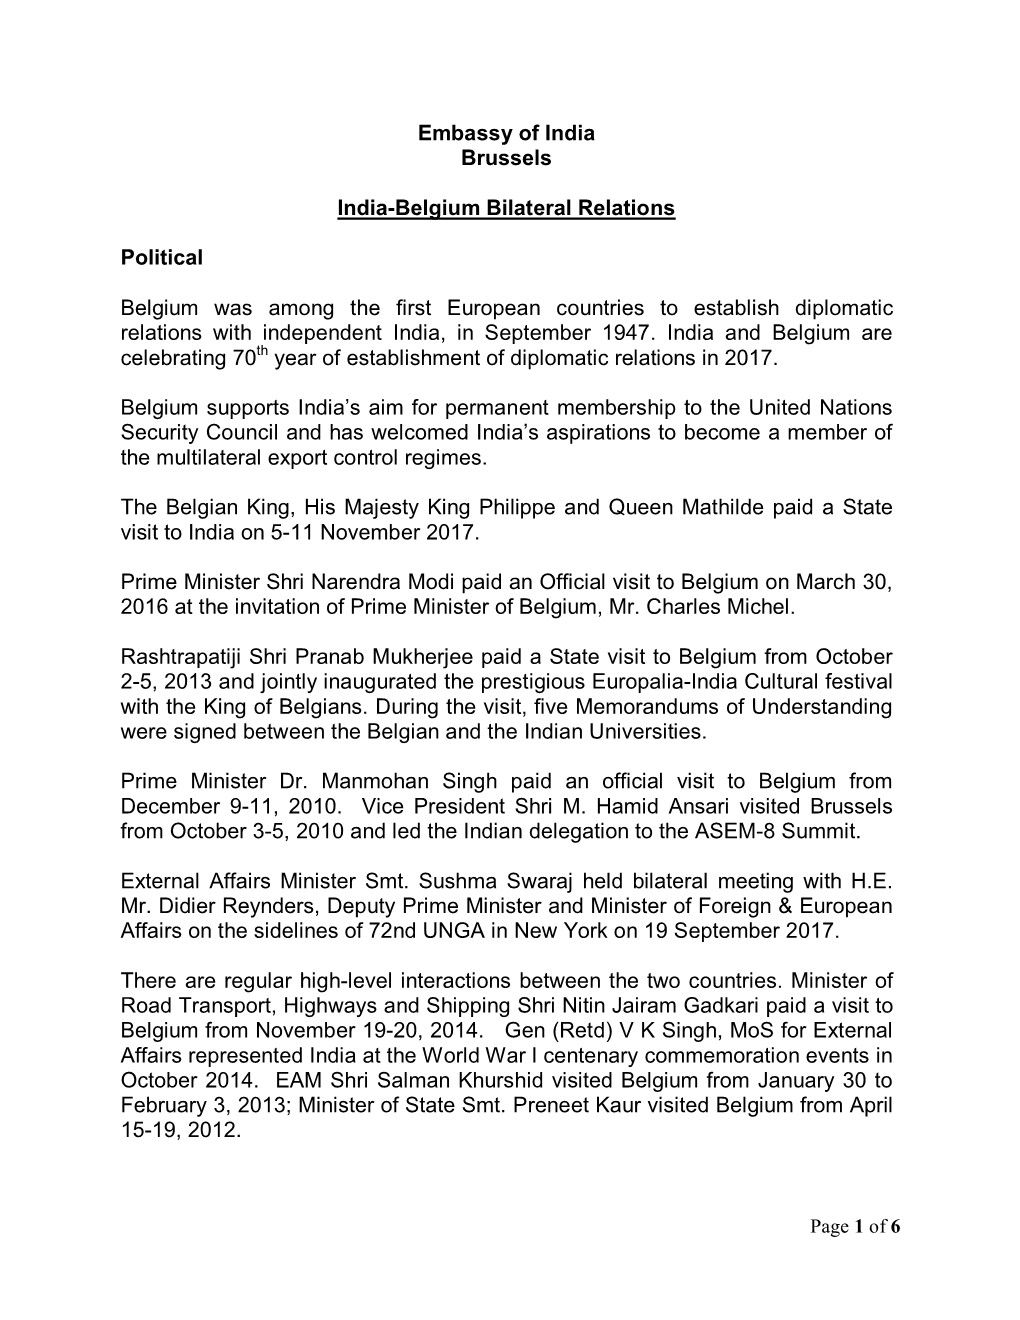 Embassy of India Brussels India-Belgium Bilateral Relations